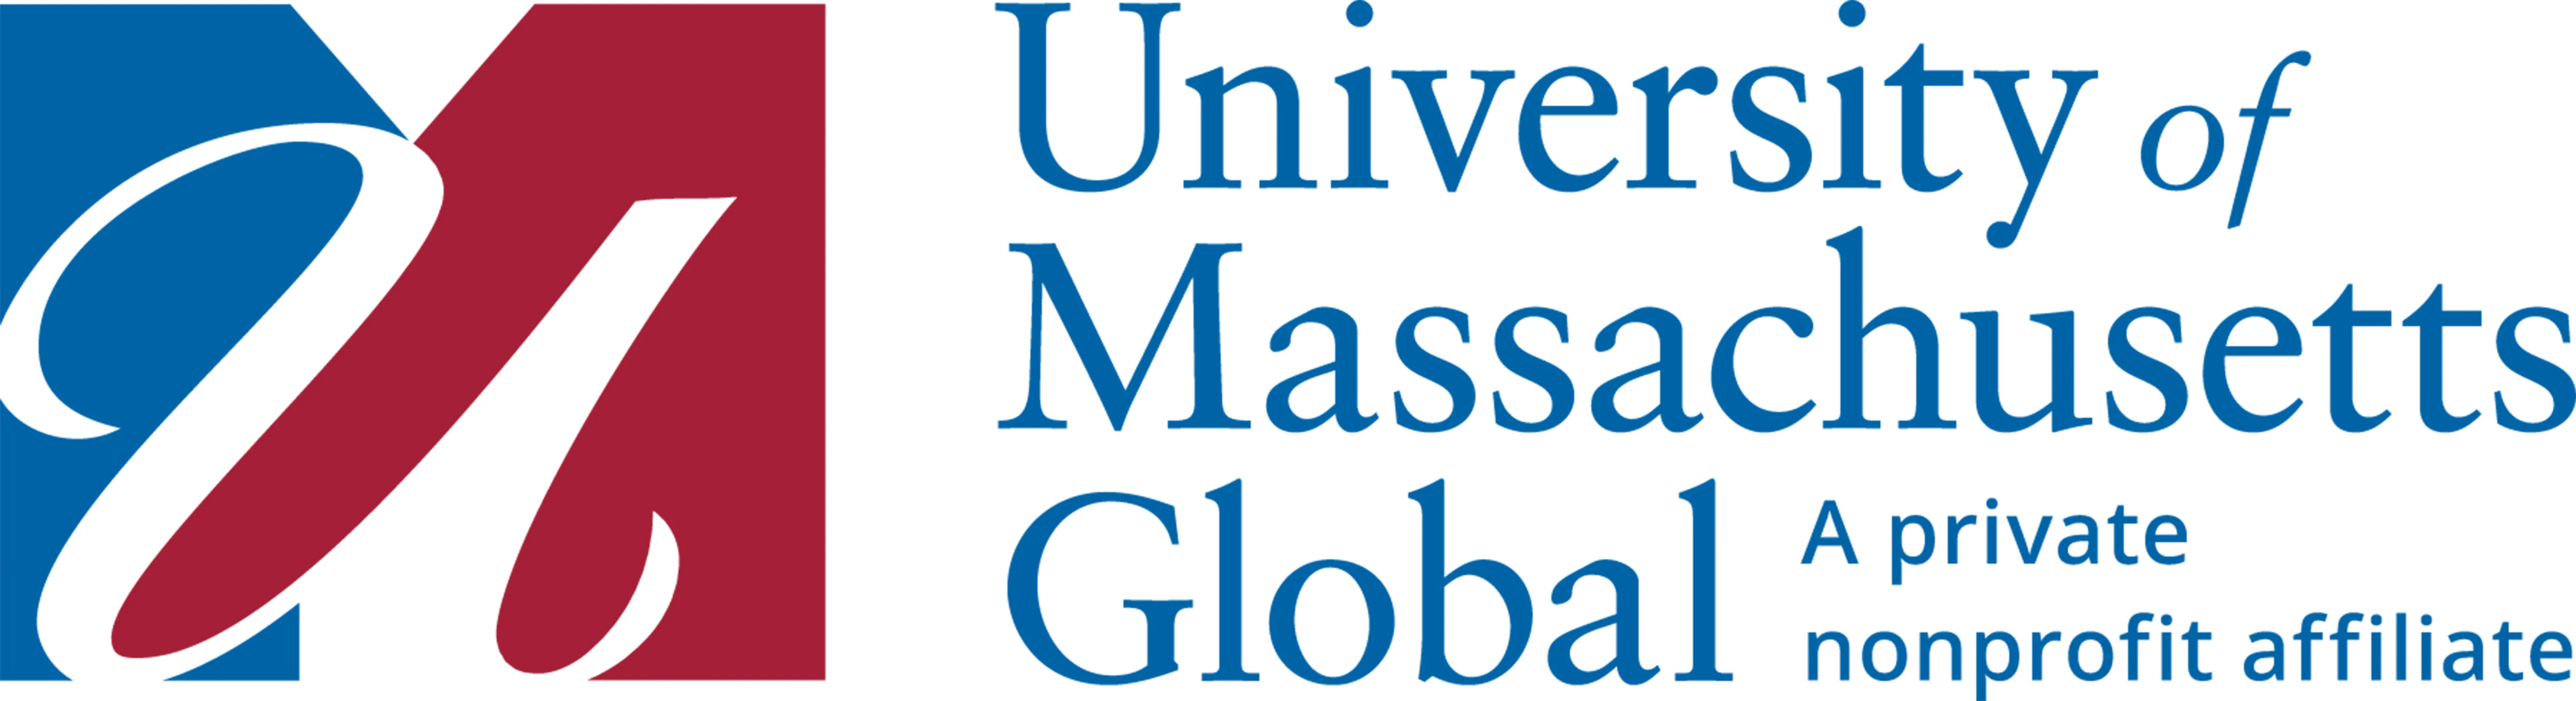 The University of Massachusetts Logo Image